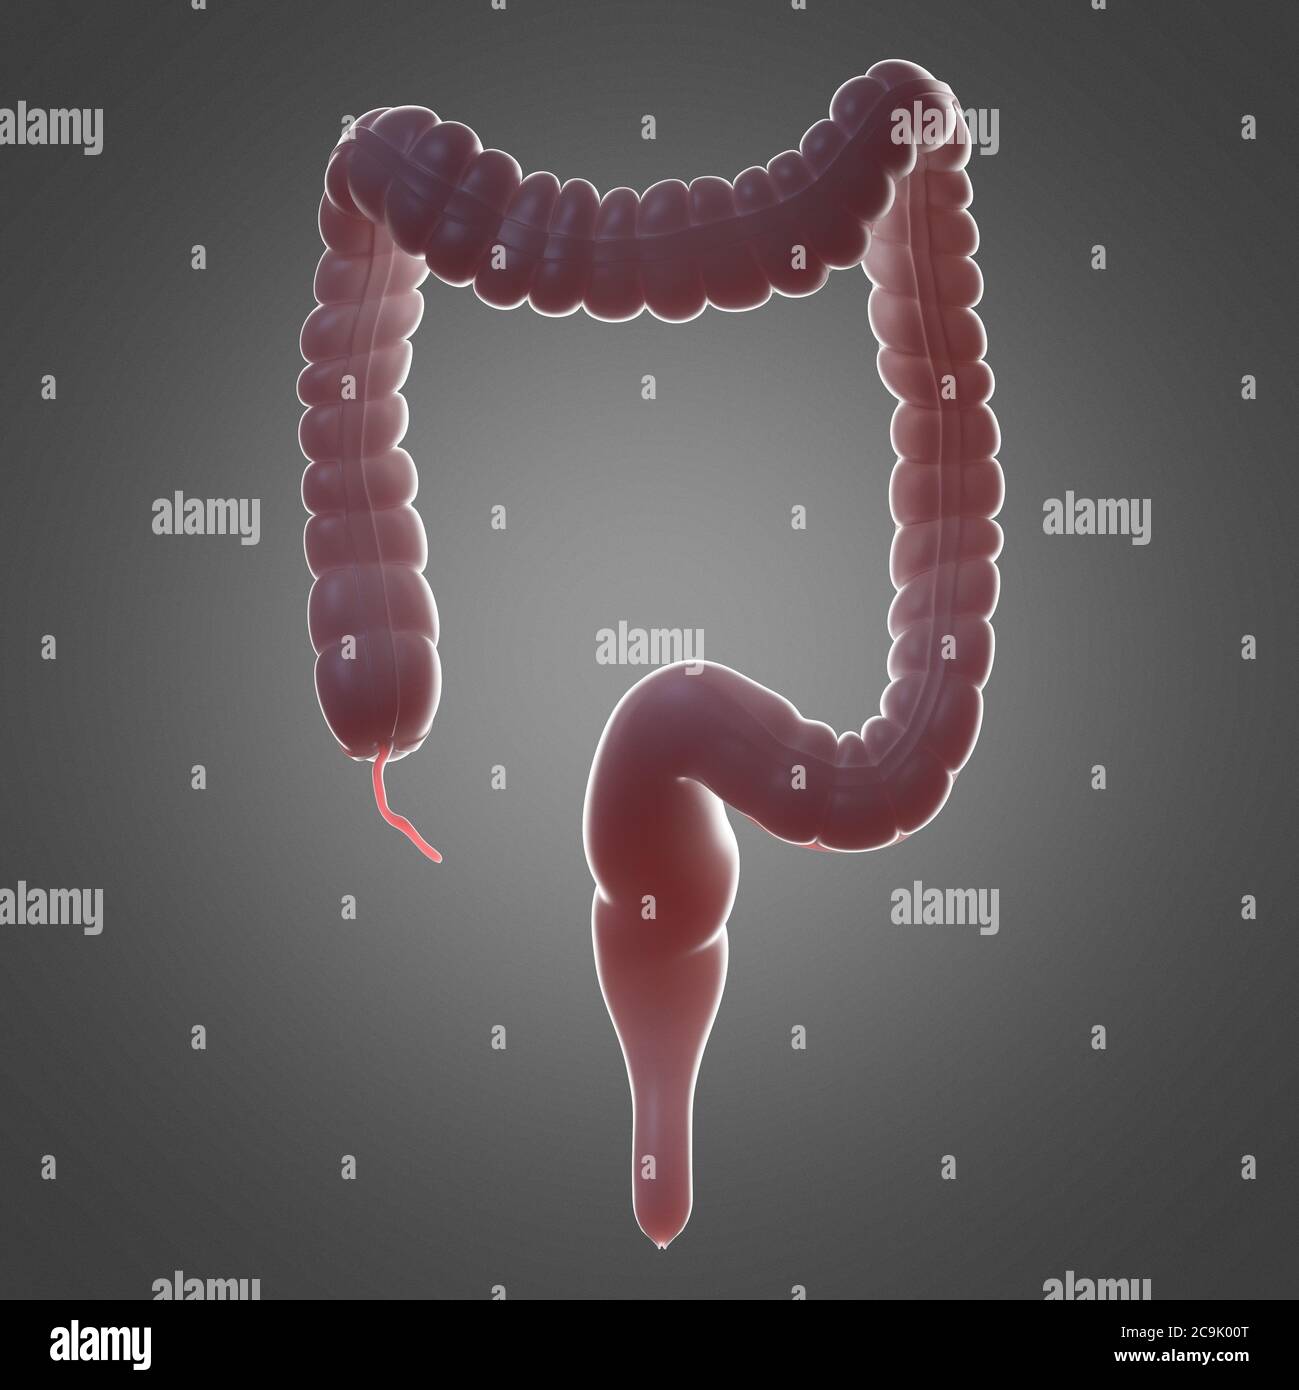 Human colon, illustration. Stock Photo